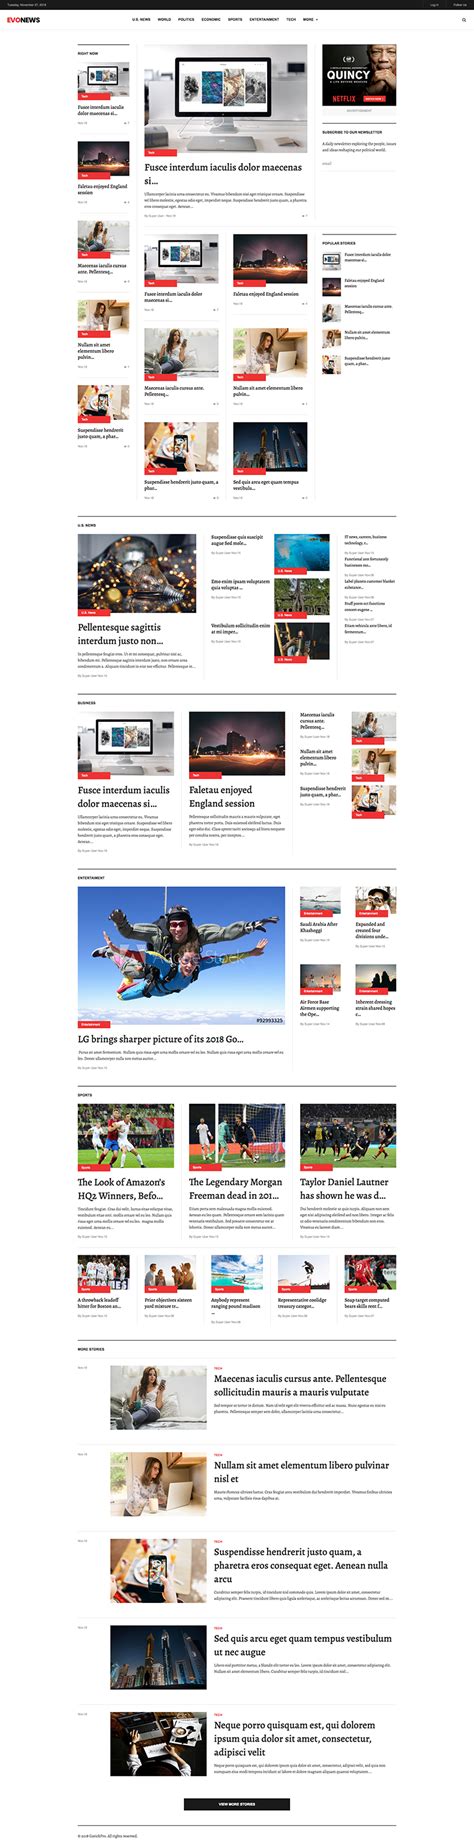 News And Magazines Joomla Template Gk Evo News Preview